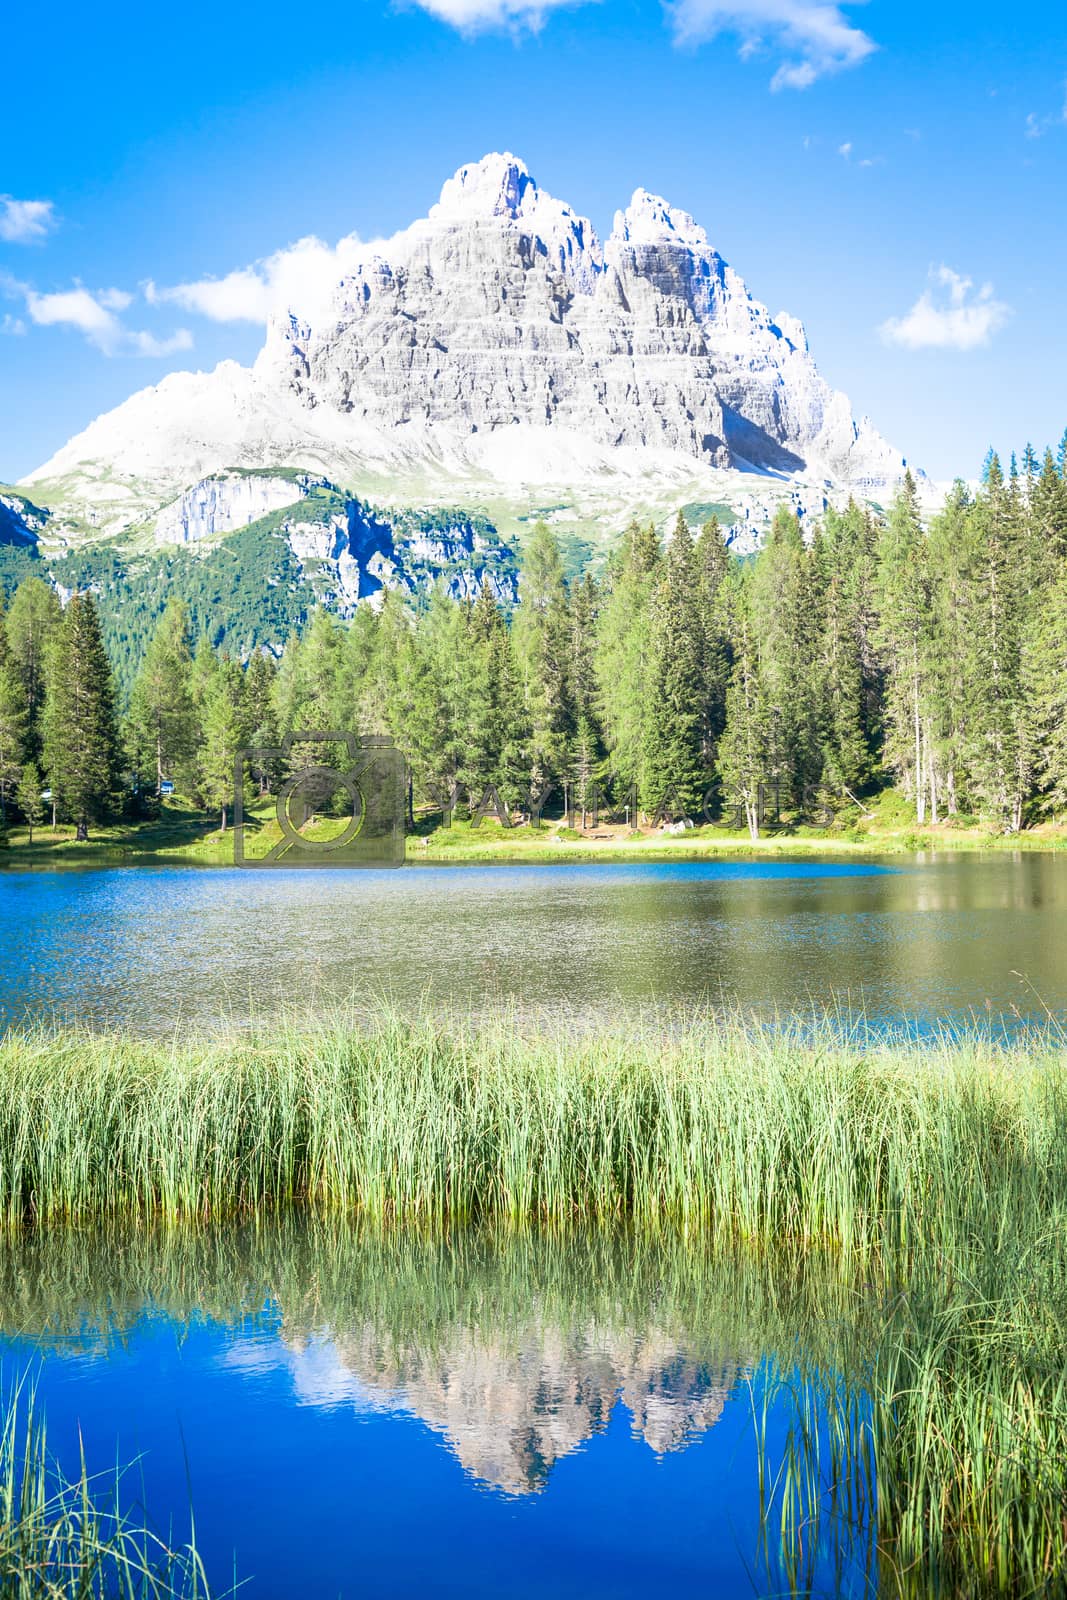 Royalty free image of Mountain landscape of Dolomiti Region, Italy. by Perseomedusa